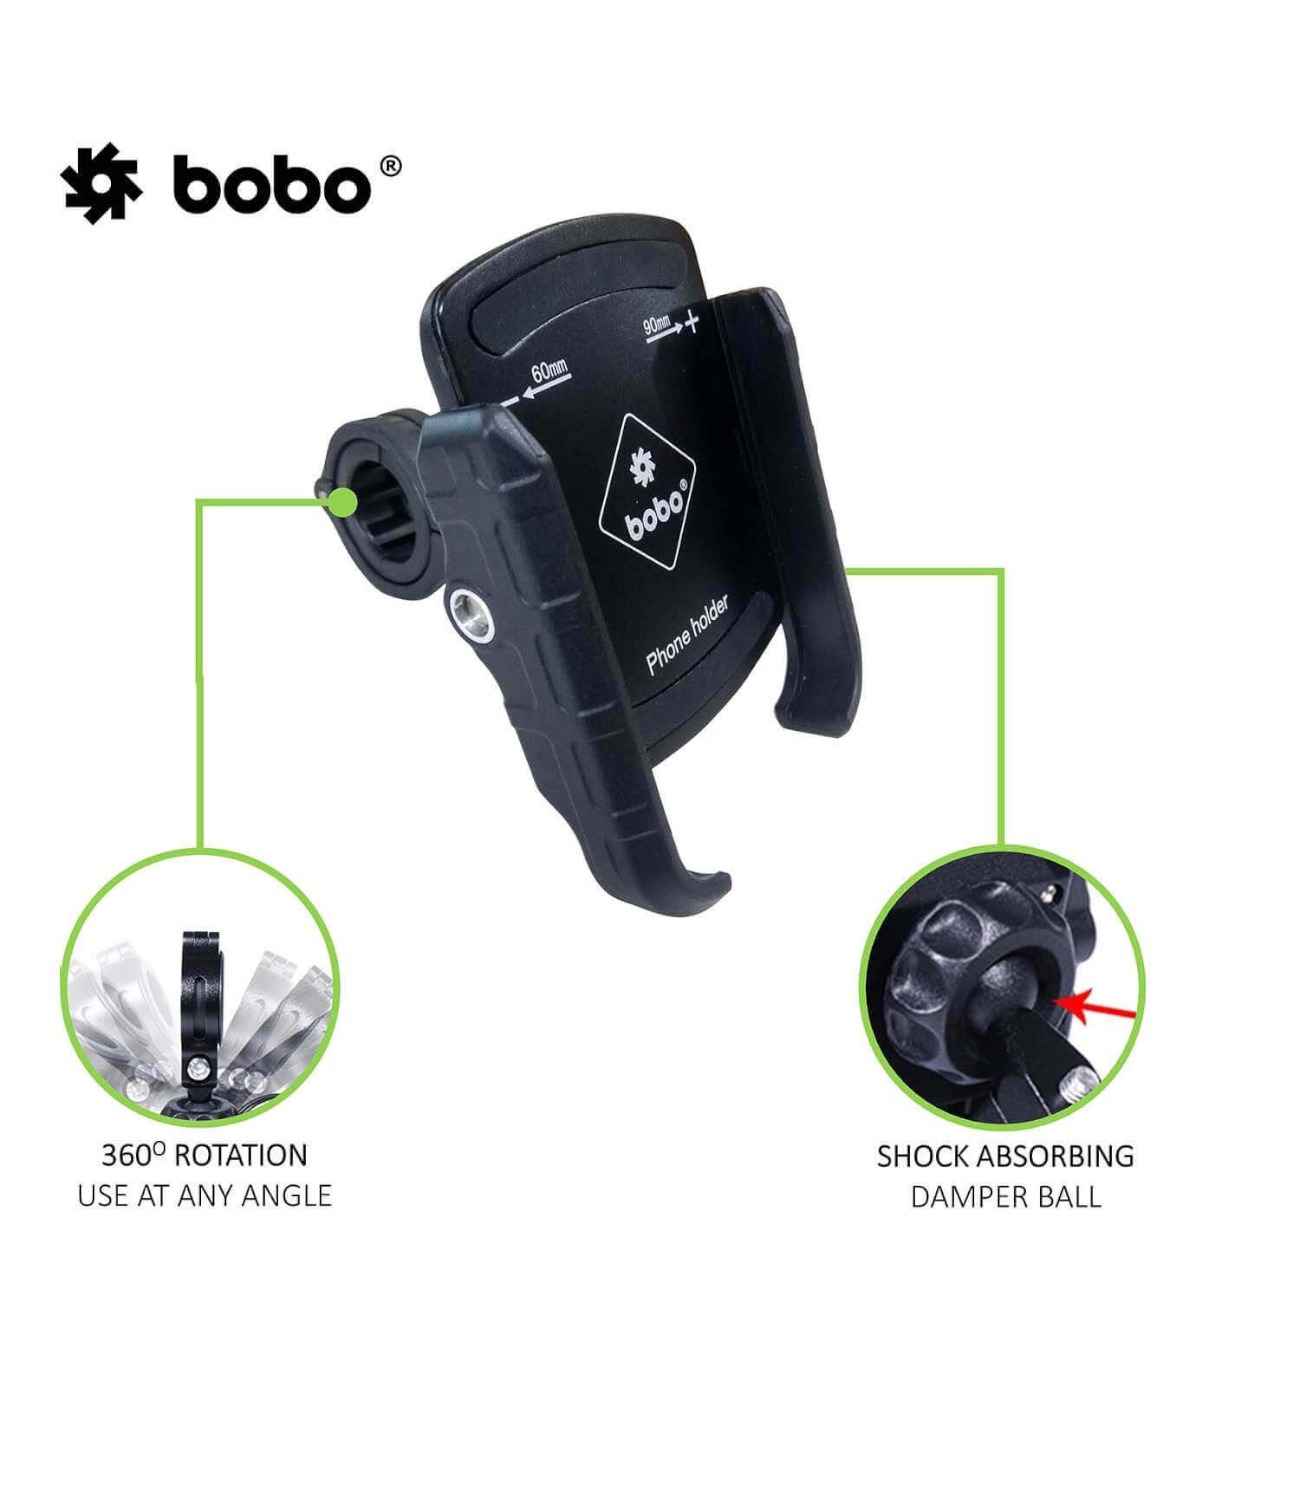 BOBO BM4 Motorcycle Phone Holder